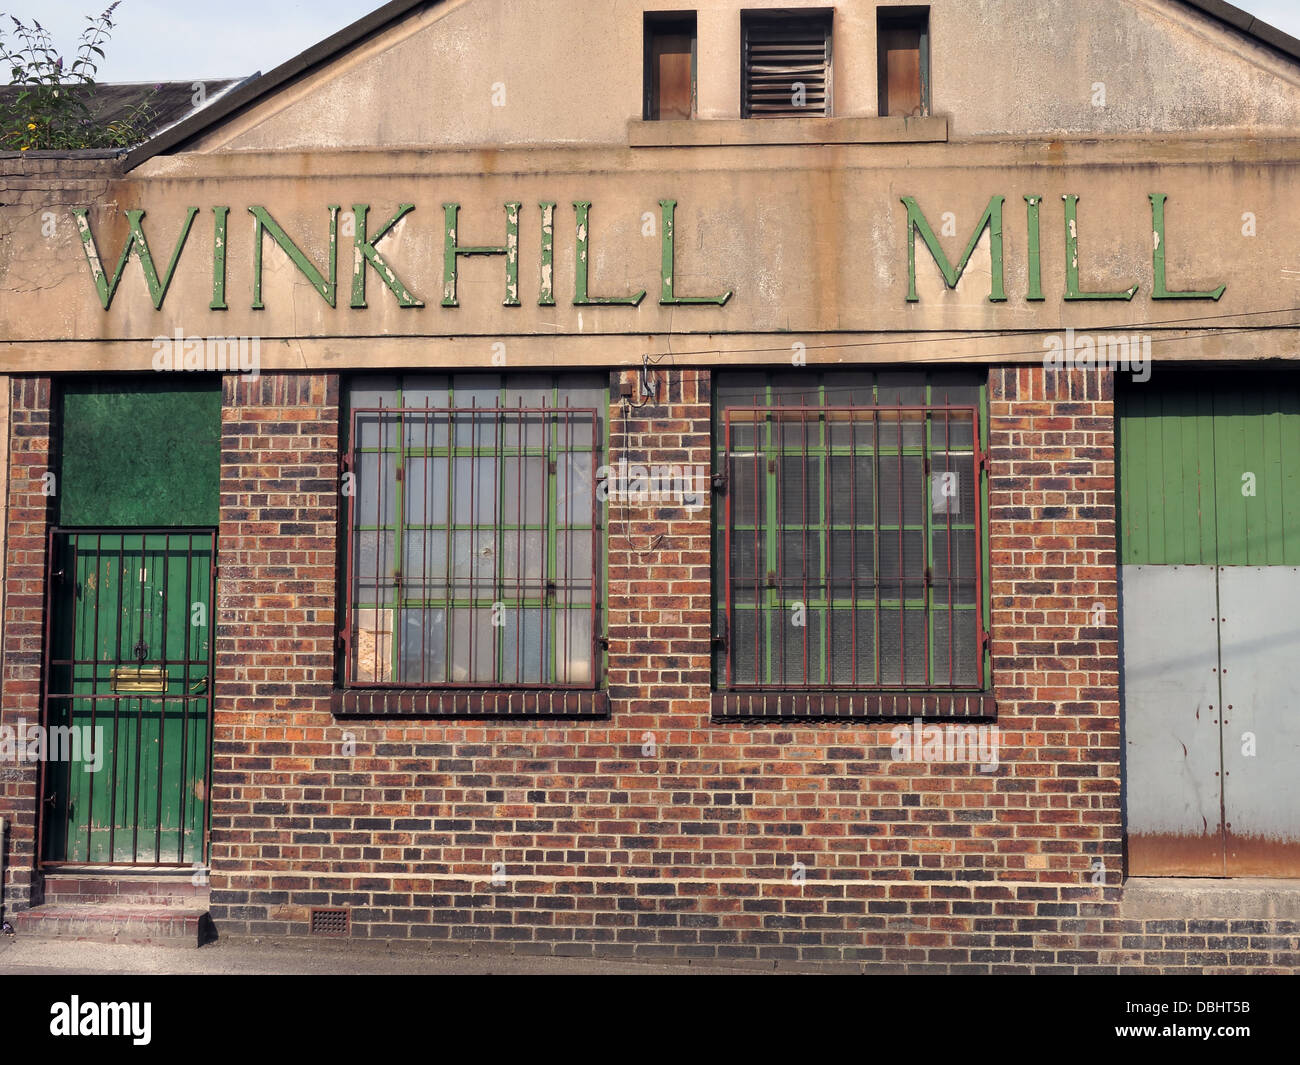 Winkhill Mill, Swan St, Stoke-on-Trent, Staffordshire, England, UK, ST4 7RH Stockfoto